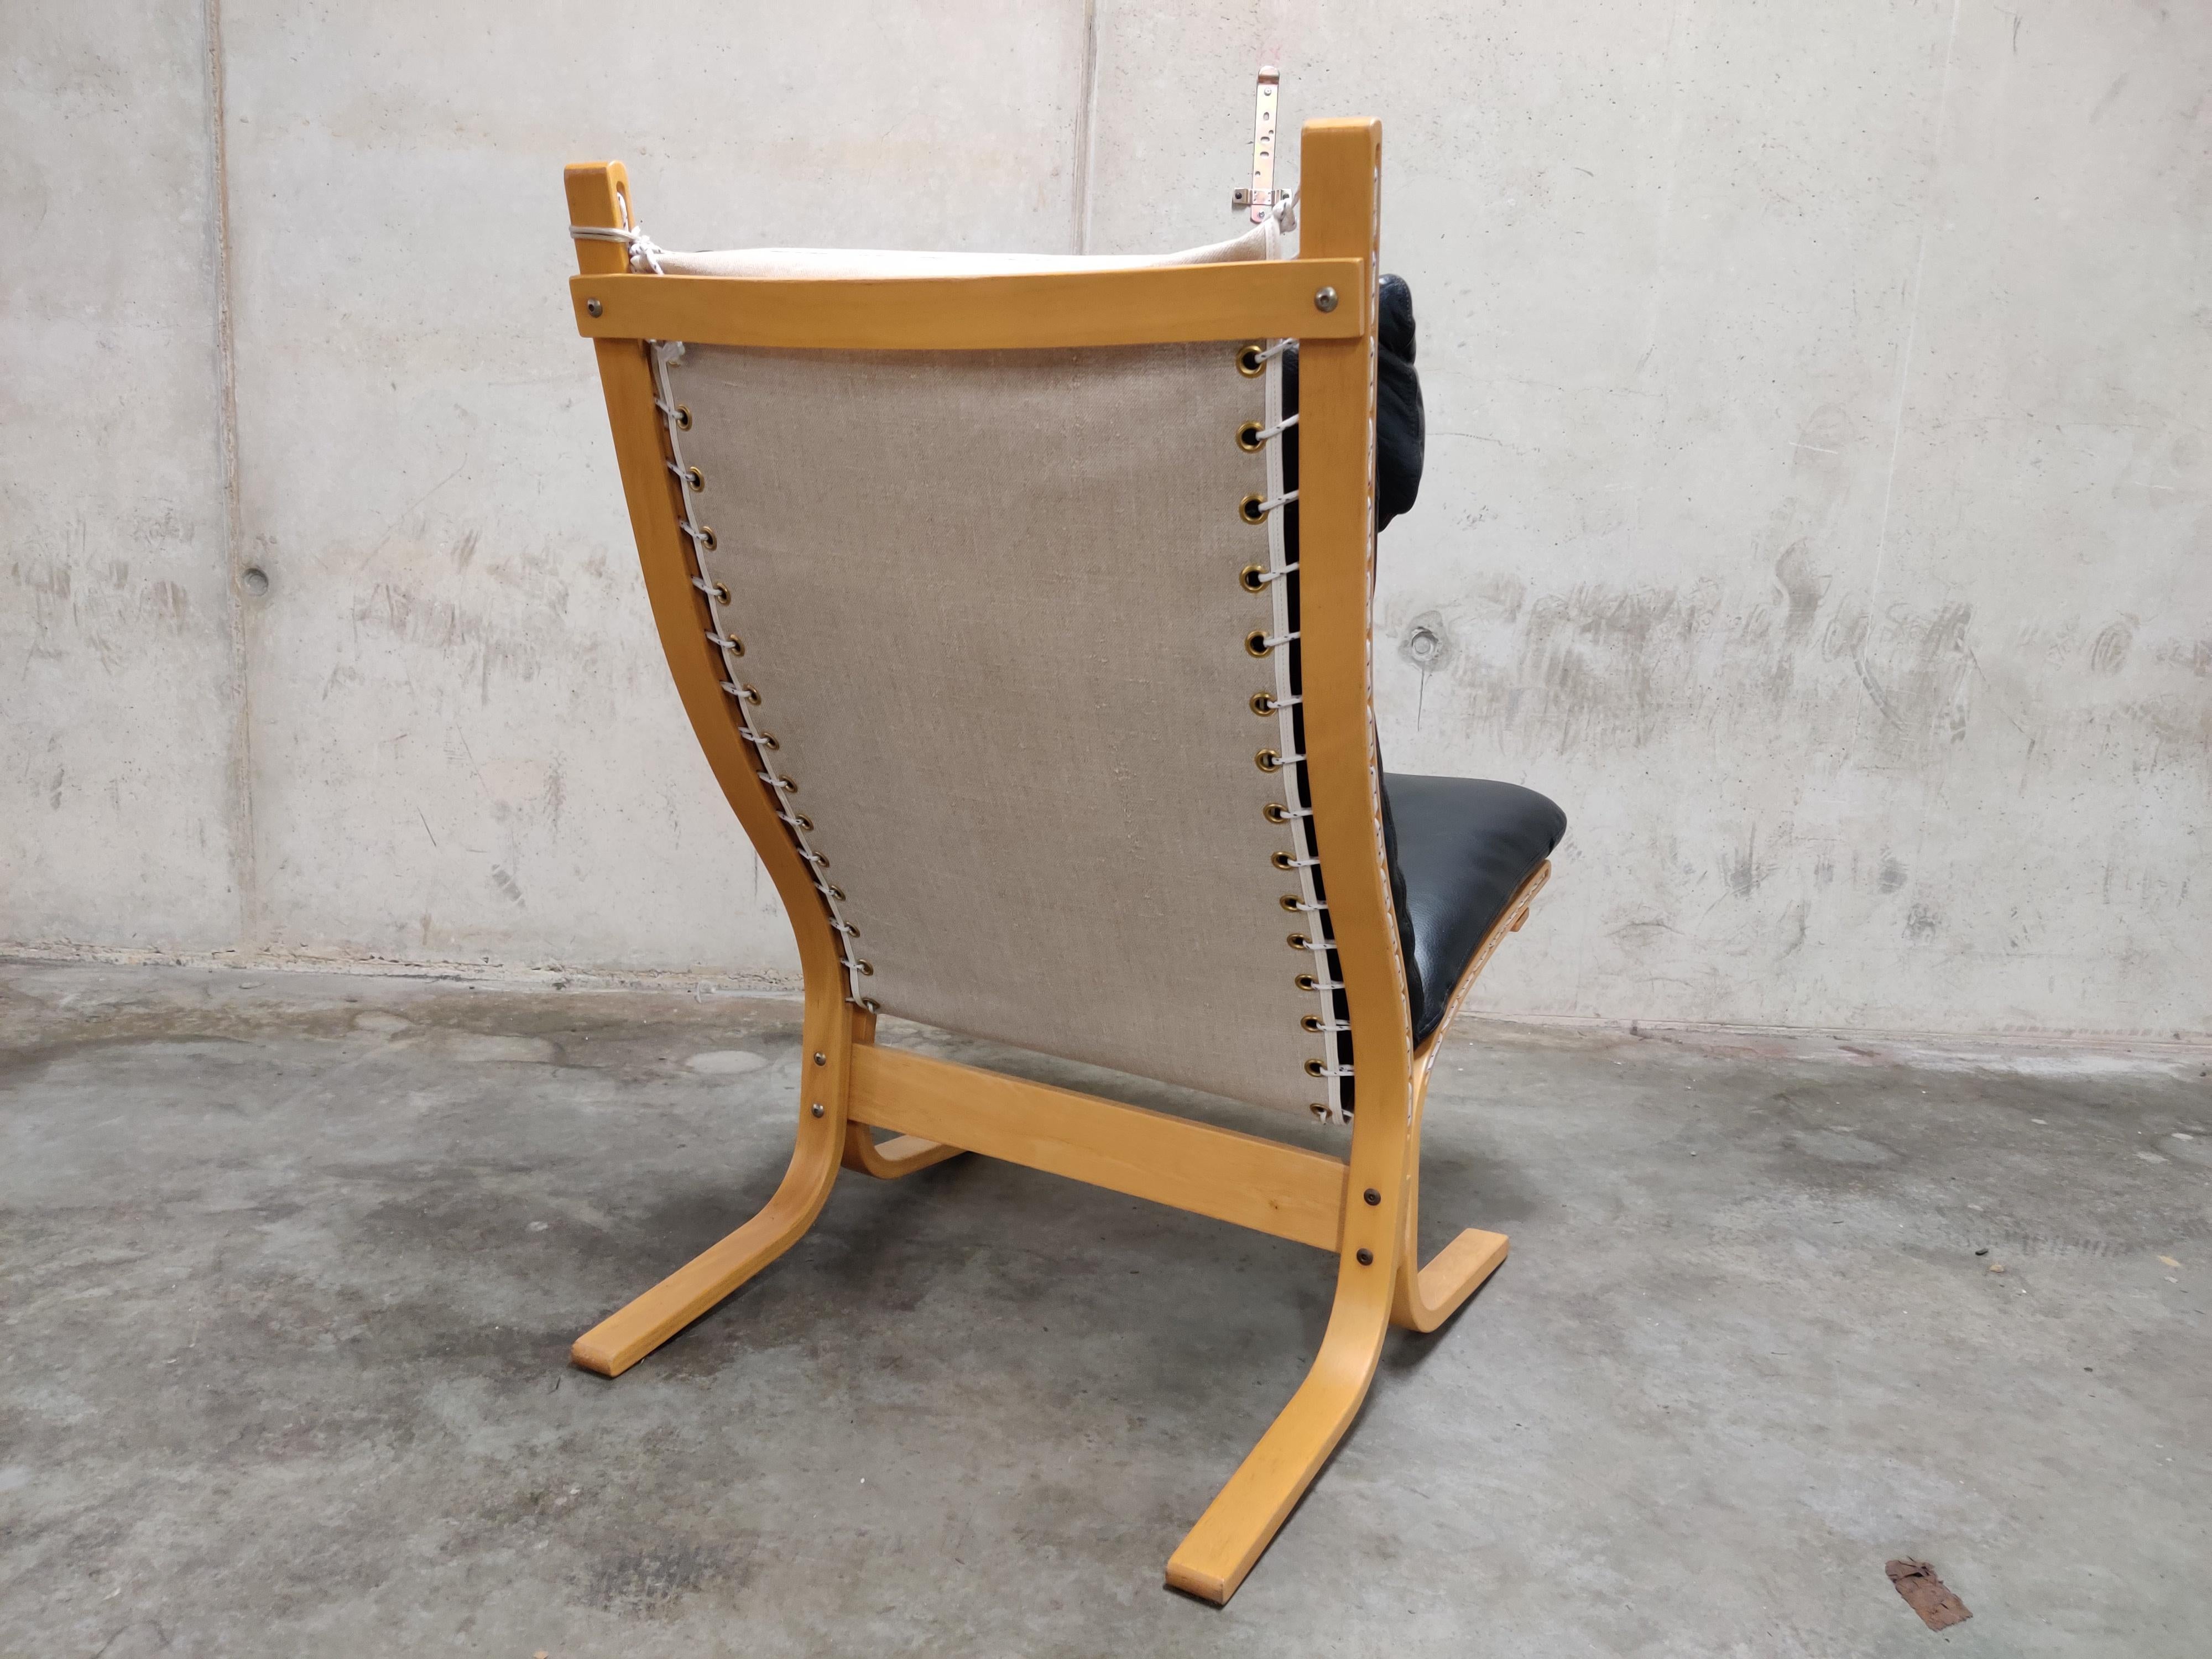 Mid-Century Modern Black Leather Siesta Chair by Ingmar Relling for Westnofa, 1970s